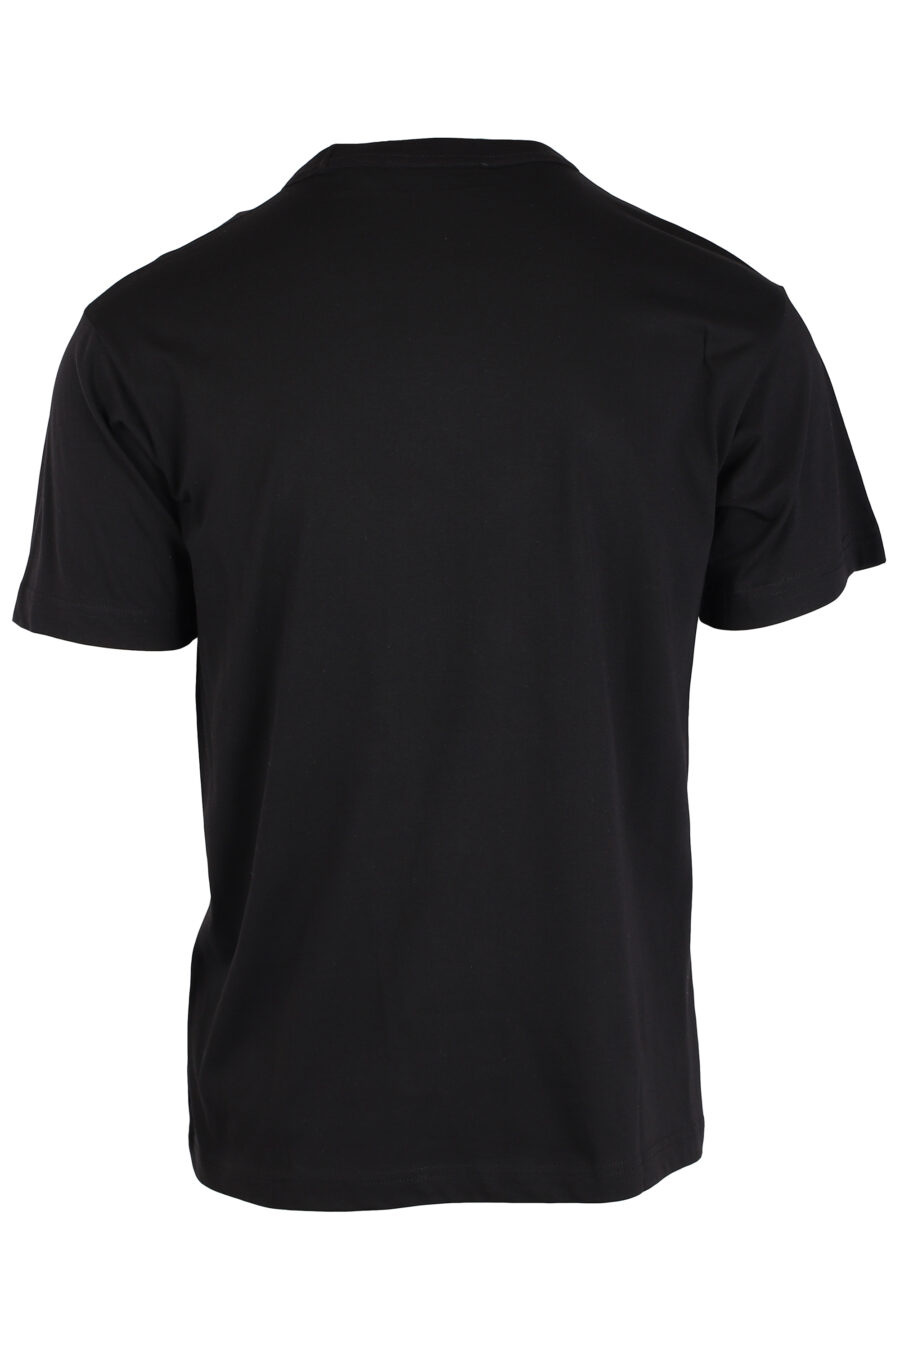 Camiseta negra con logo redondo blanco - IMG 4008